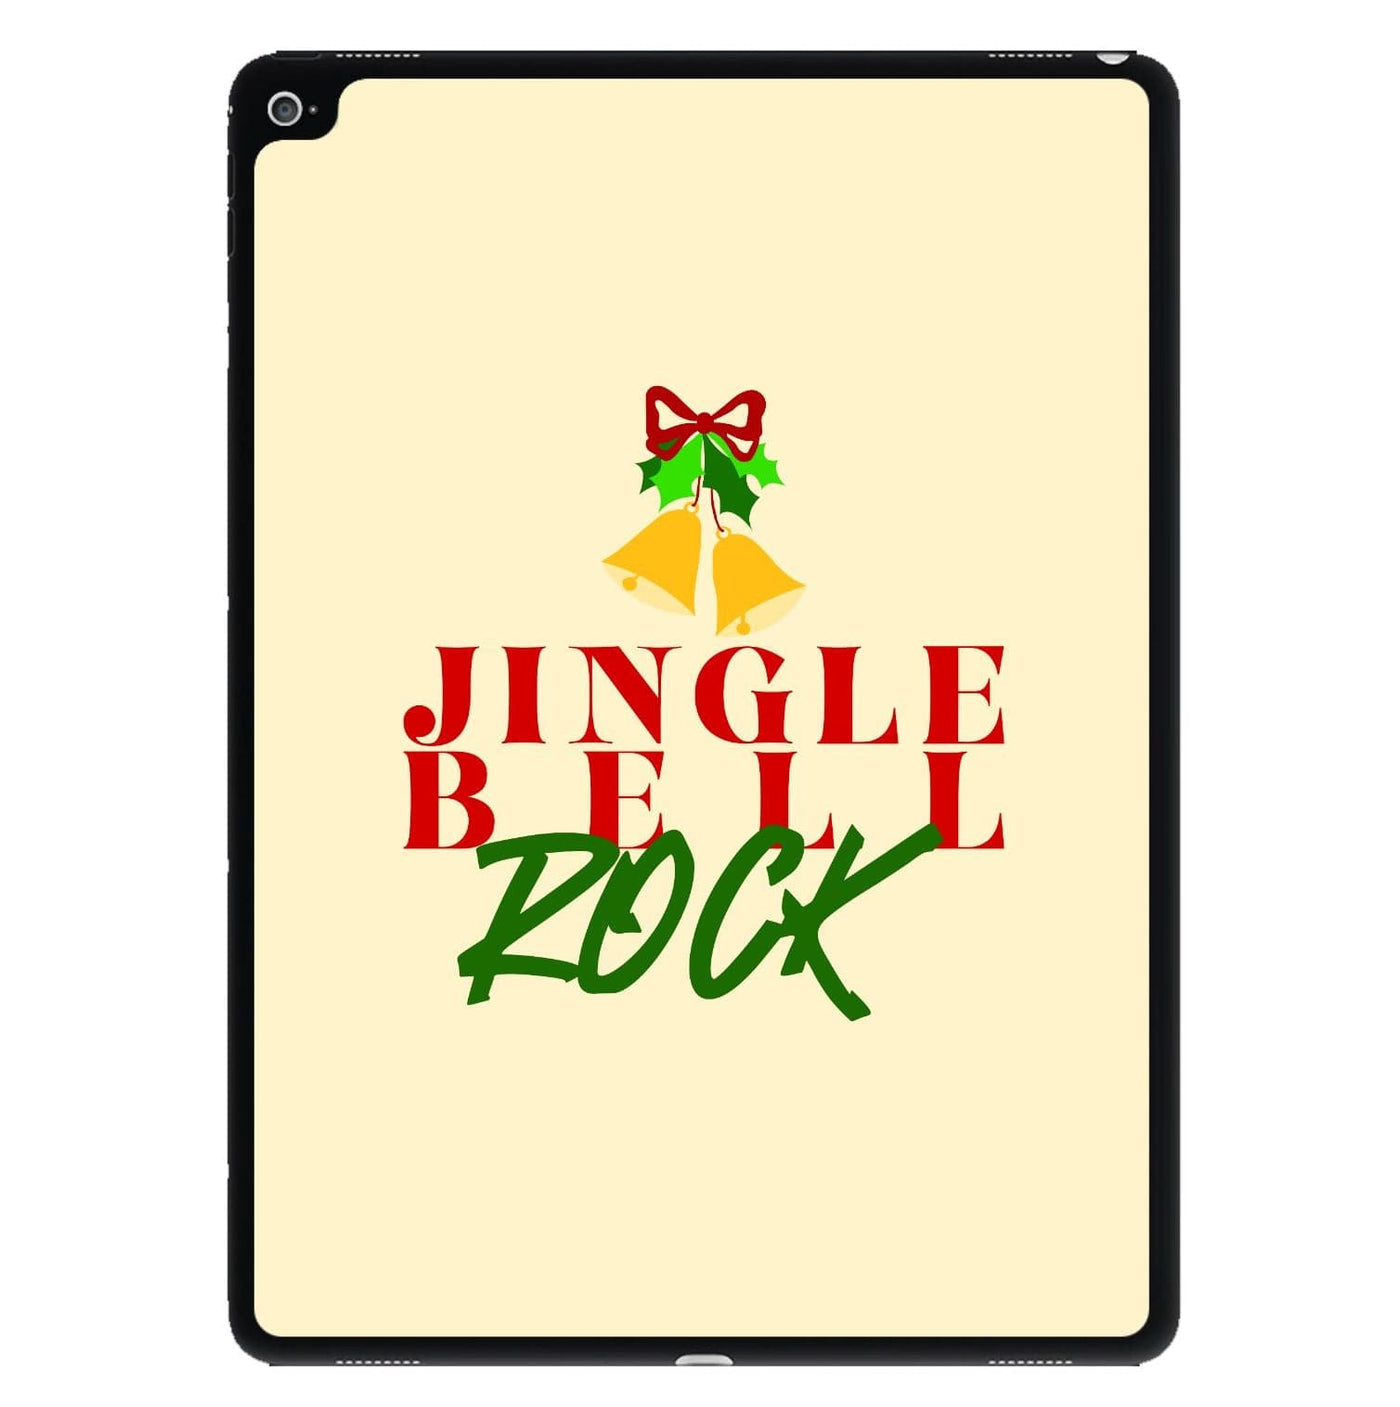 Jingle Bell Rock - Christmas Songs iPad Case